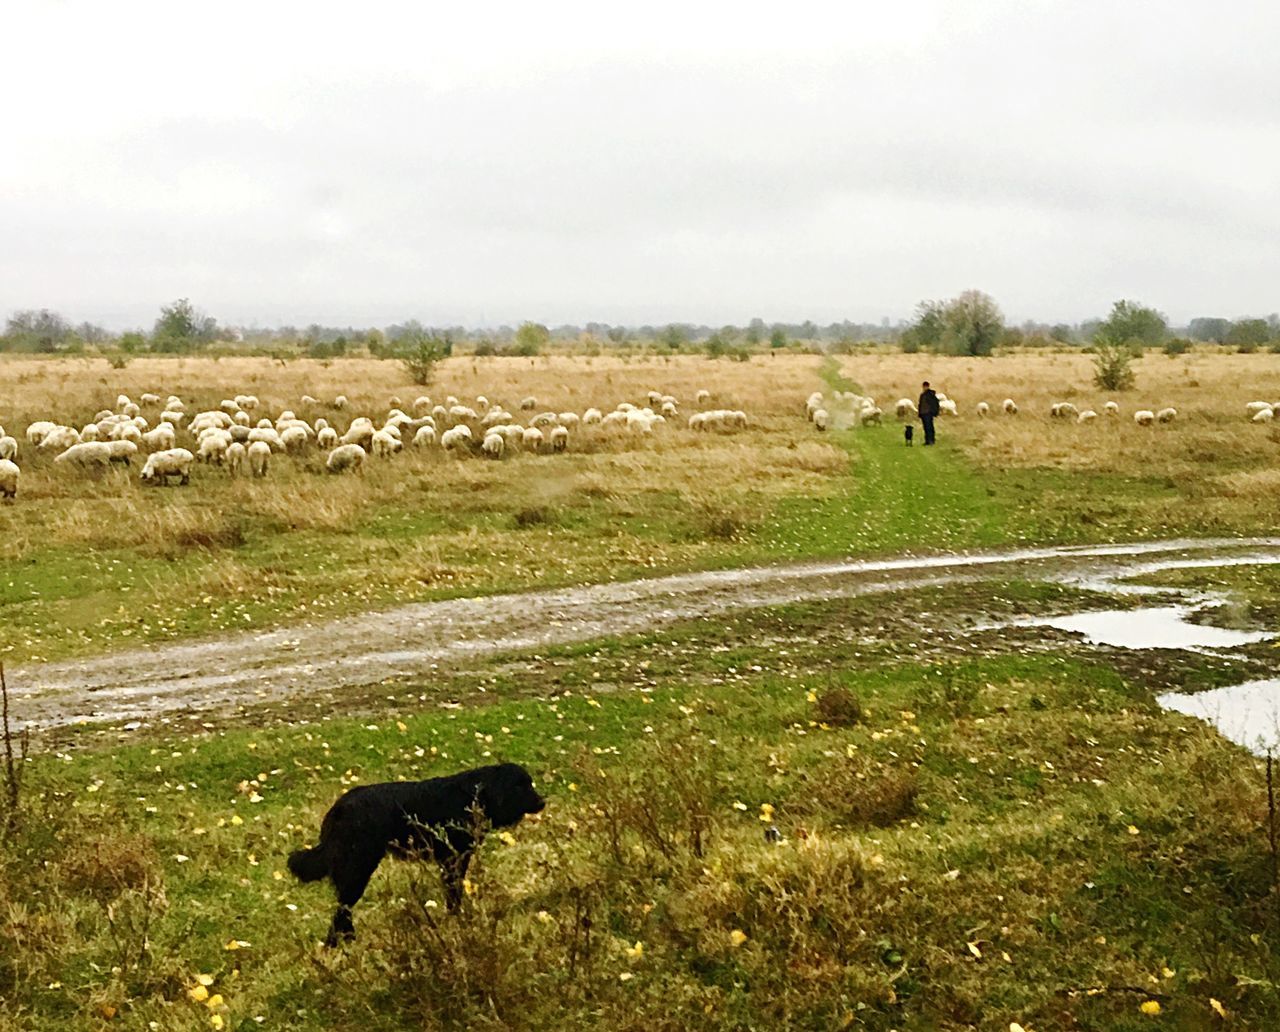 DOG WALKING ON FIELD BY FARM AGAINST SKY